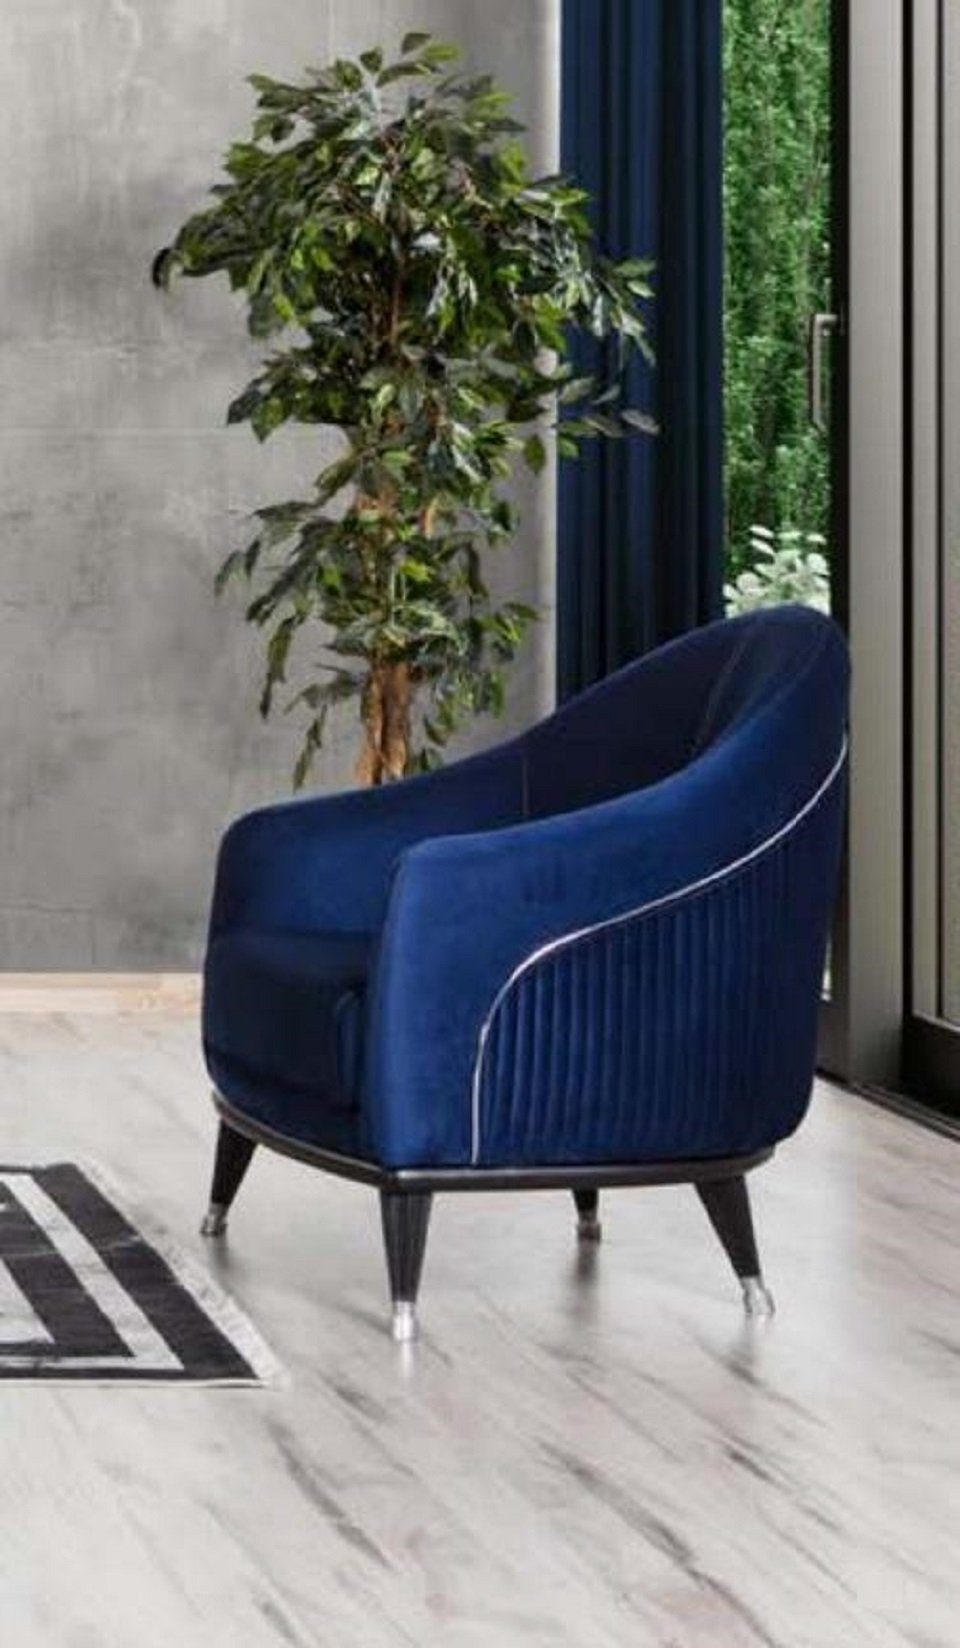 JVmoebel Neu Sessel Luxus Lehnstuhl Blau Europe (Sessel), Modern in Stoff Made Sessel Wohnzimmer 1 Sitz Sitz